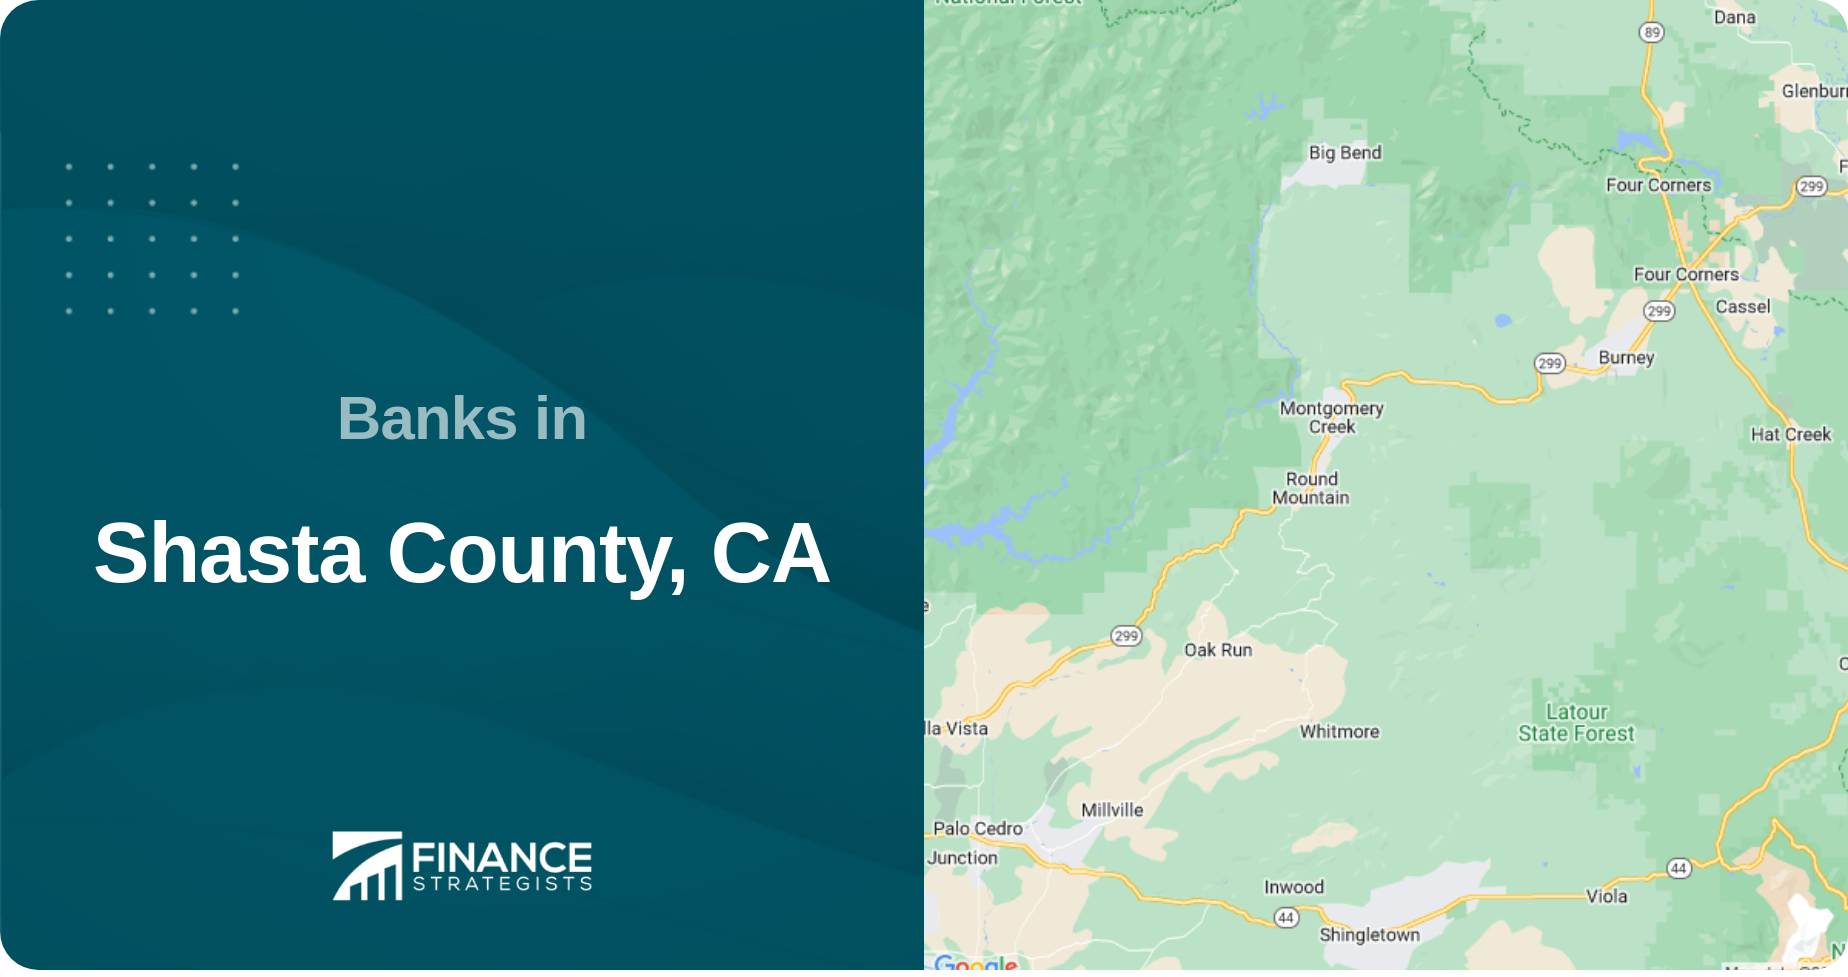 Banks in Shasta County, CA